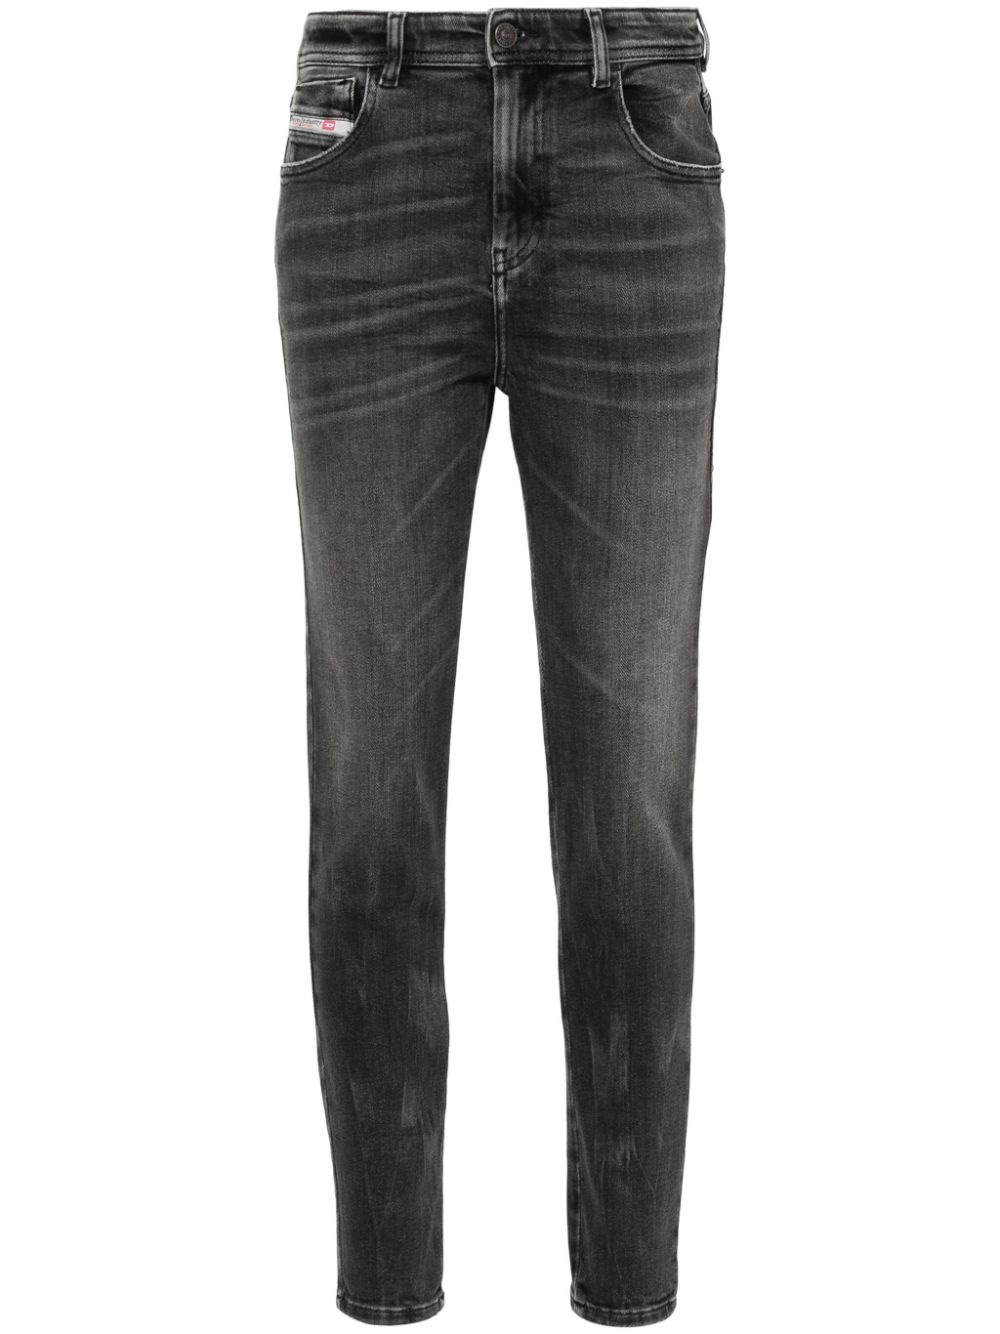 1984 Slandy-High 09h87 skinny jeans - 1